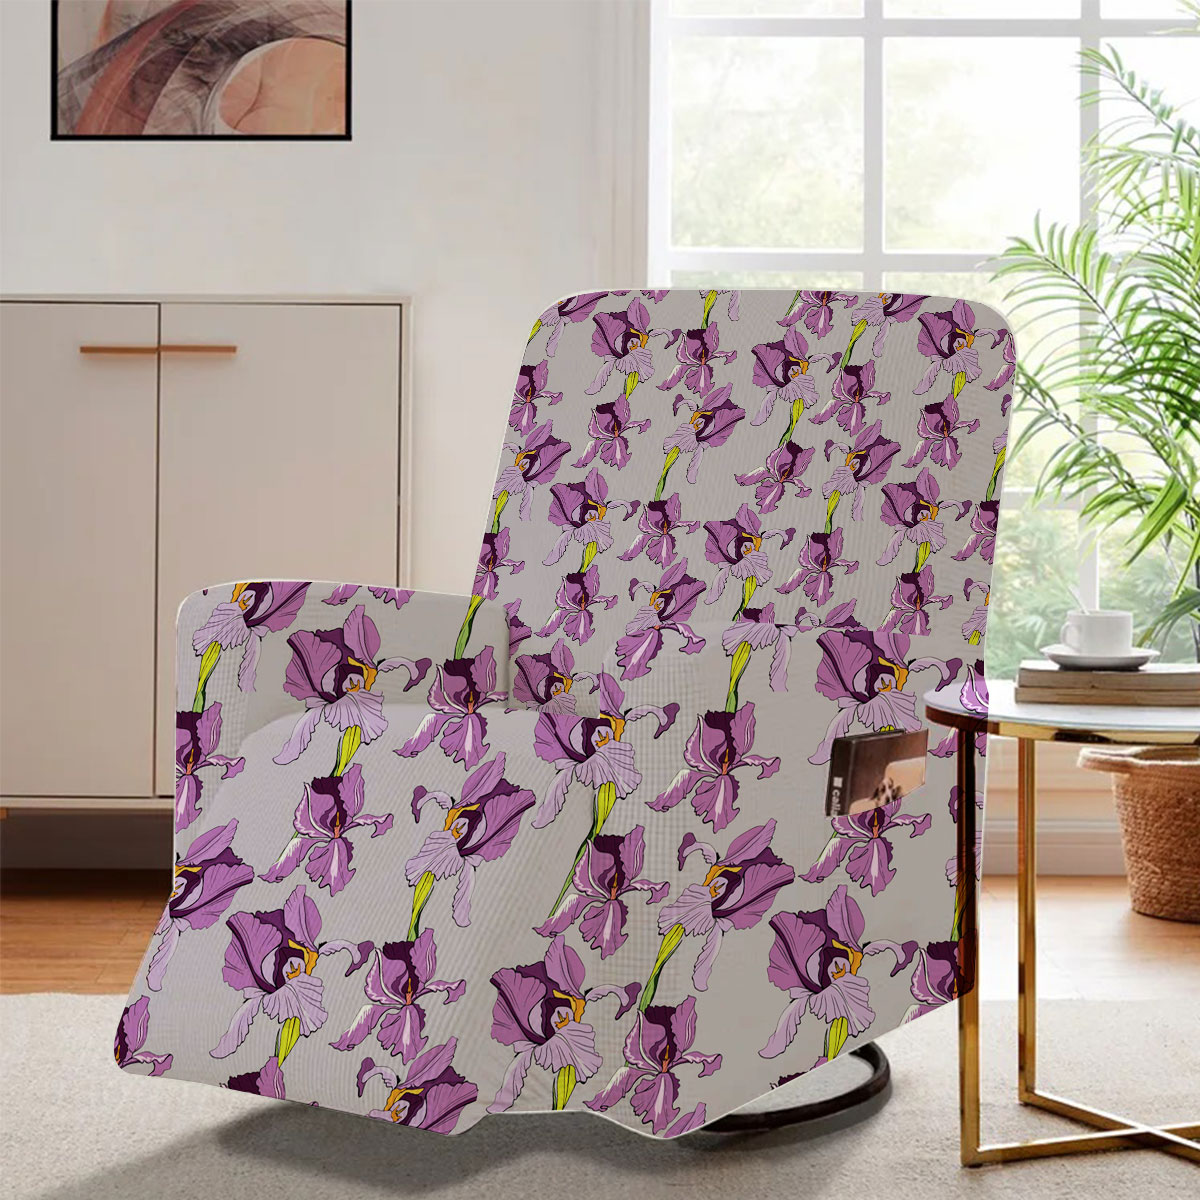 Seamless Pattern With Purple Iris Flowers Recliner Slipcover